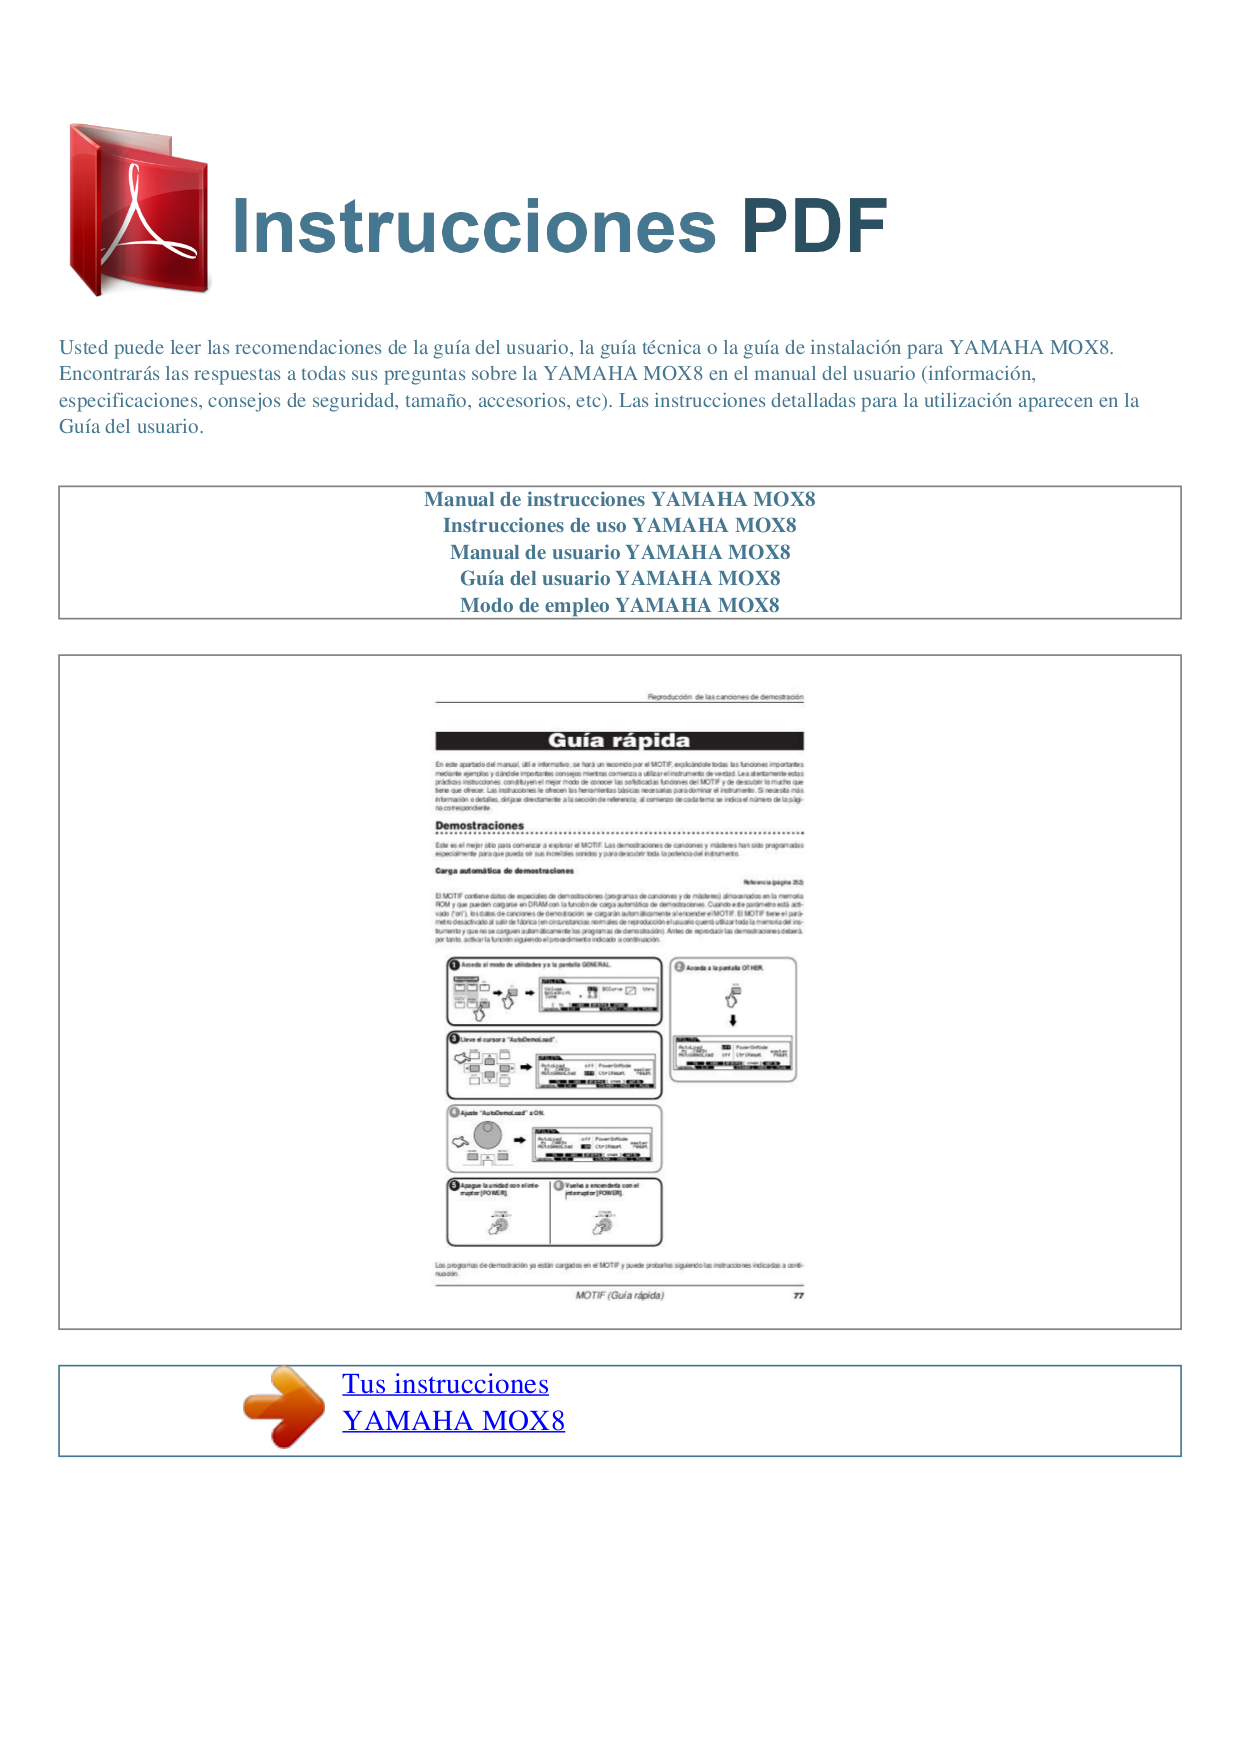 es6 pdf download